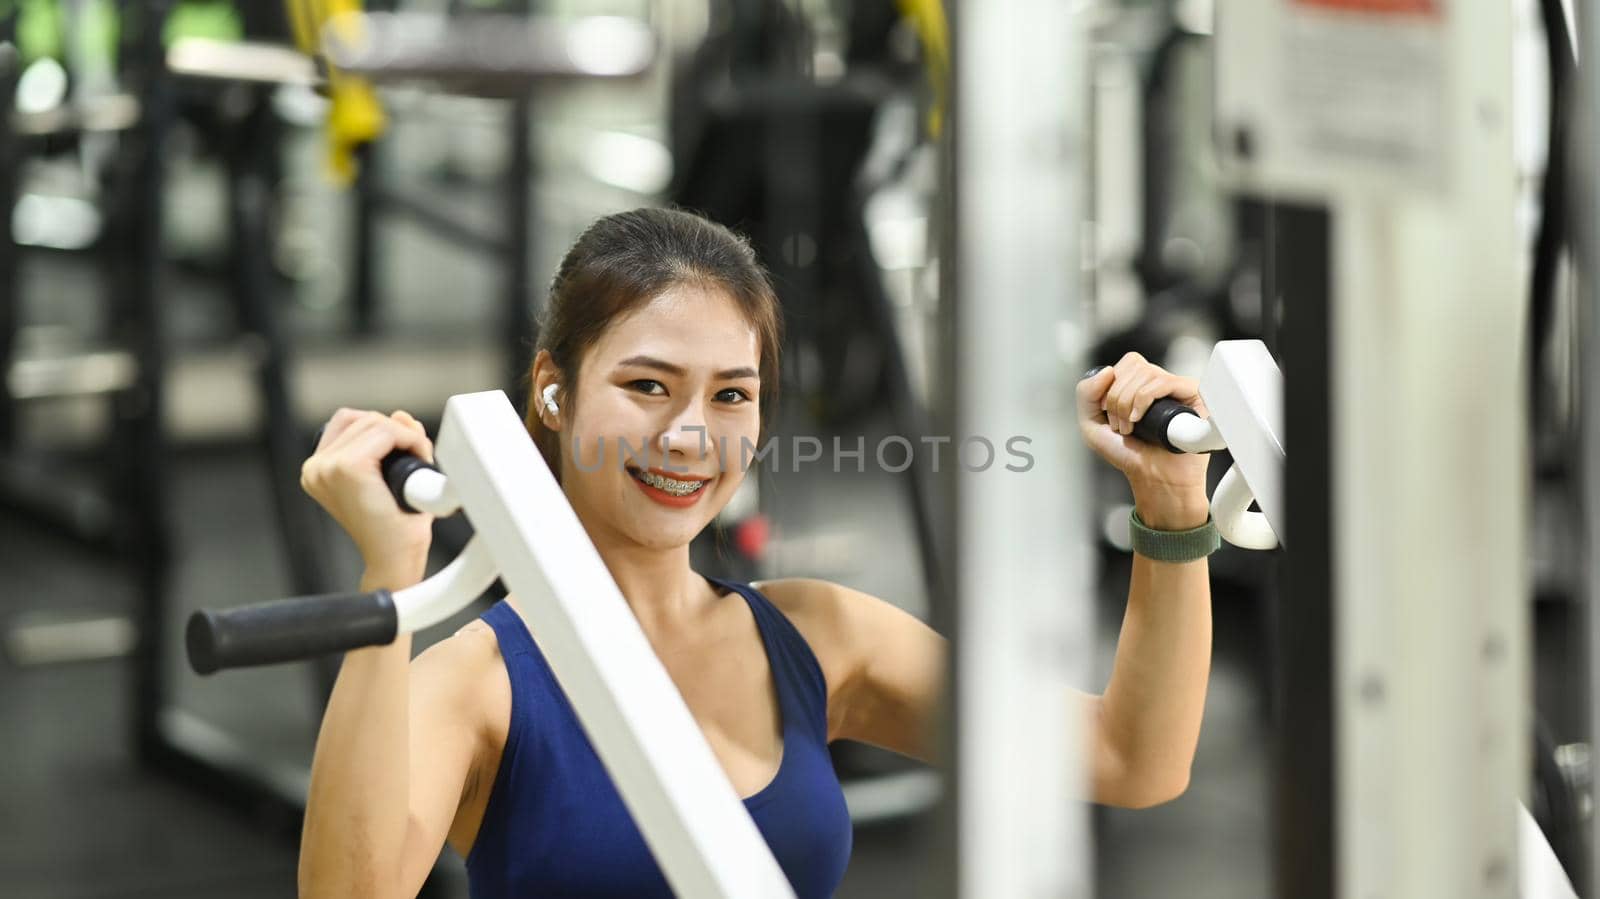 Fitness women in sportswear exercising at the gym. by prathanchorruangsak